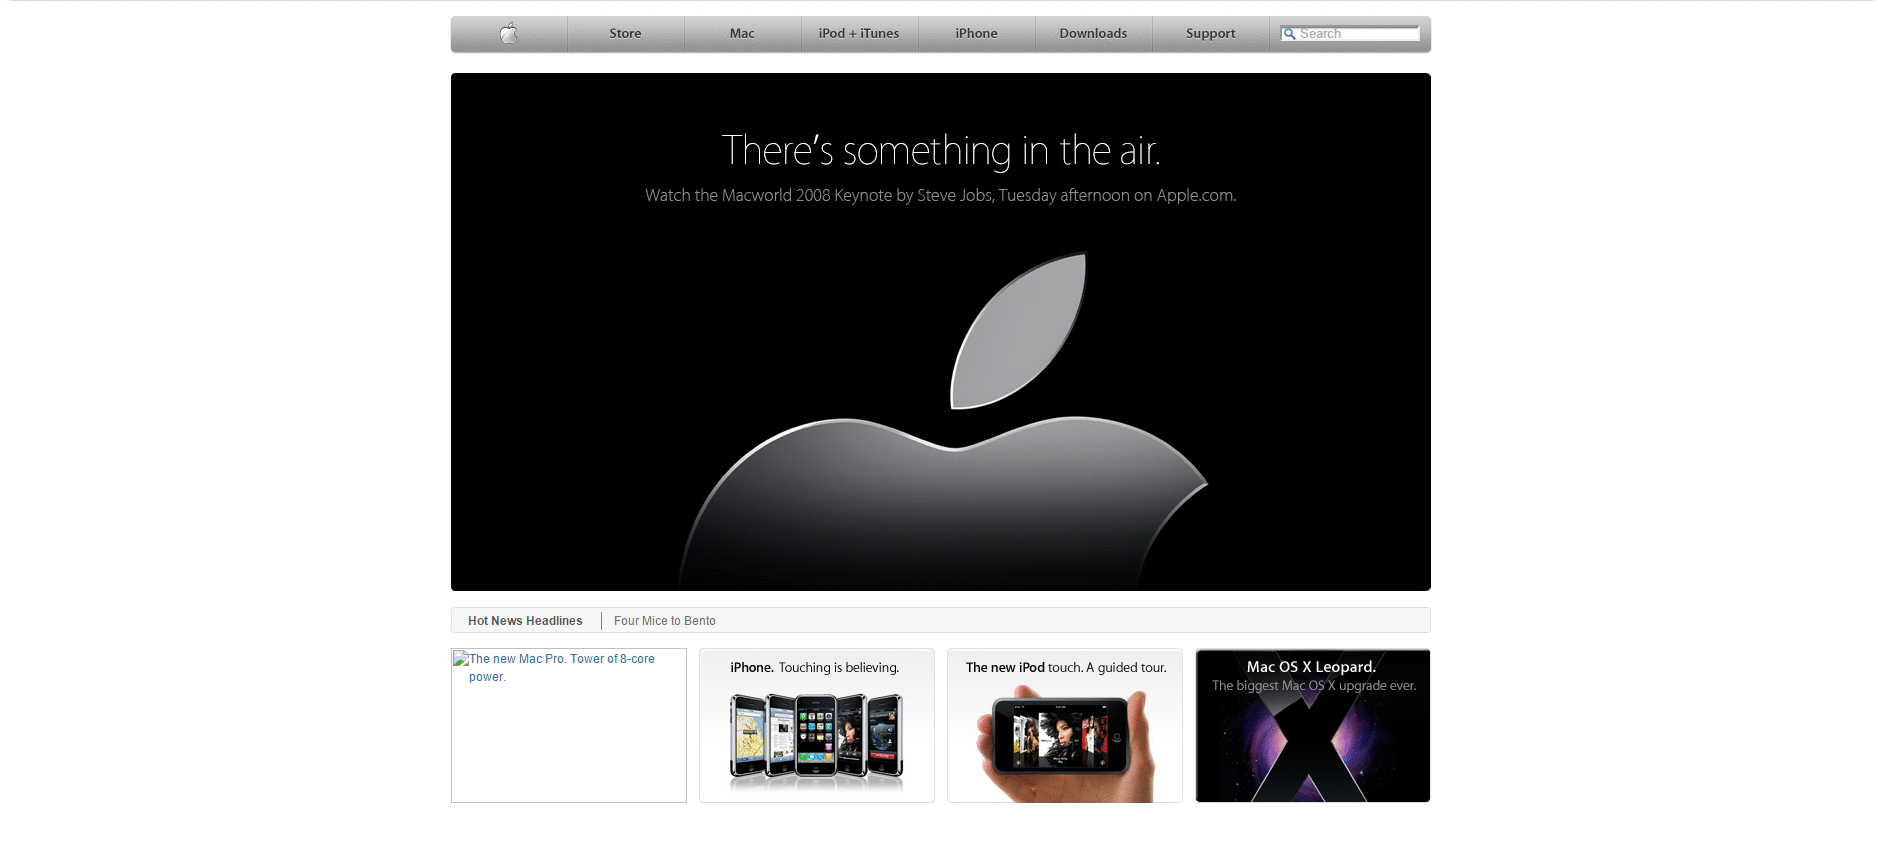 apple.com Website Design in 2008